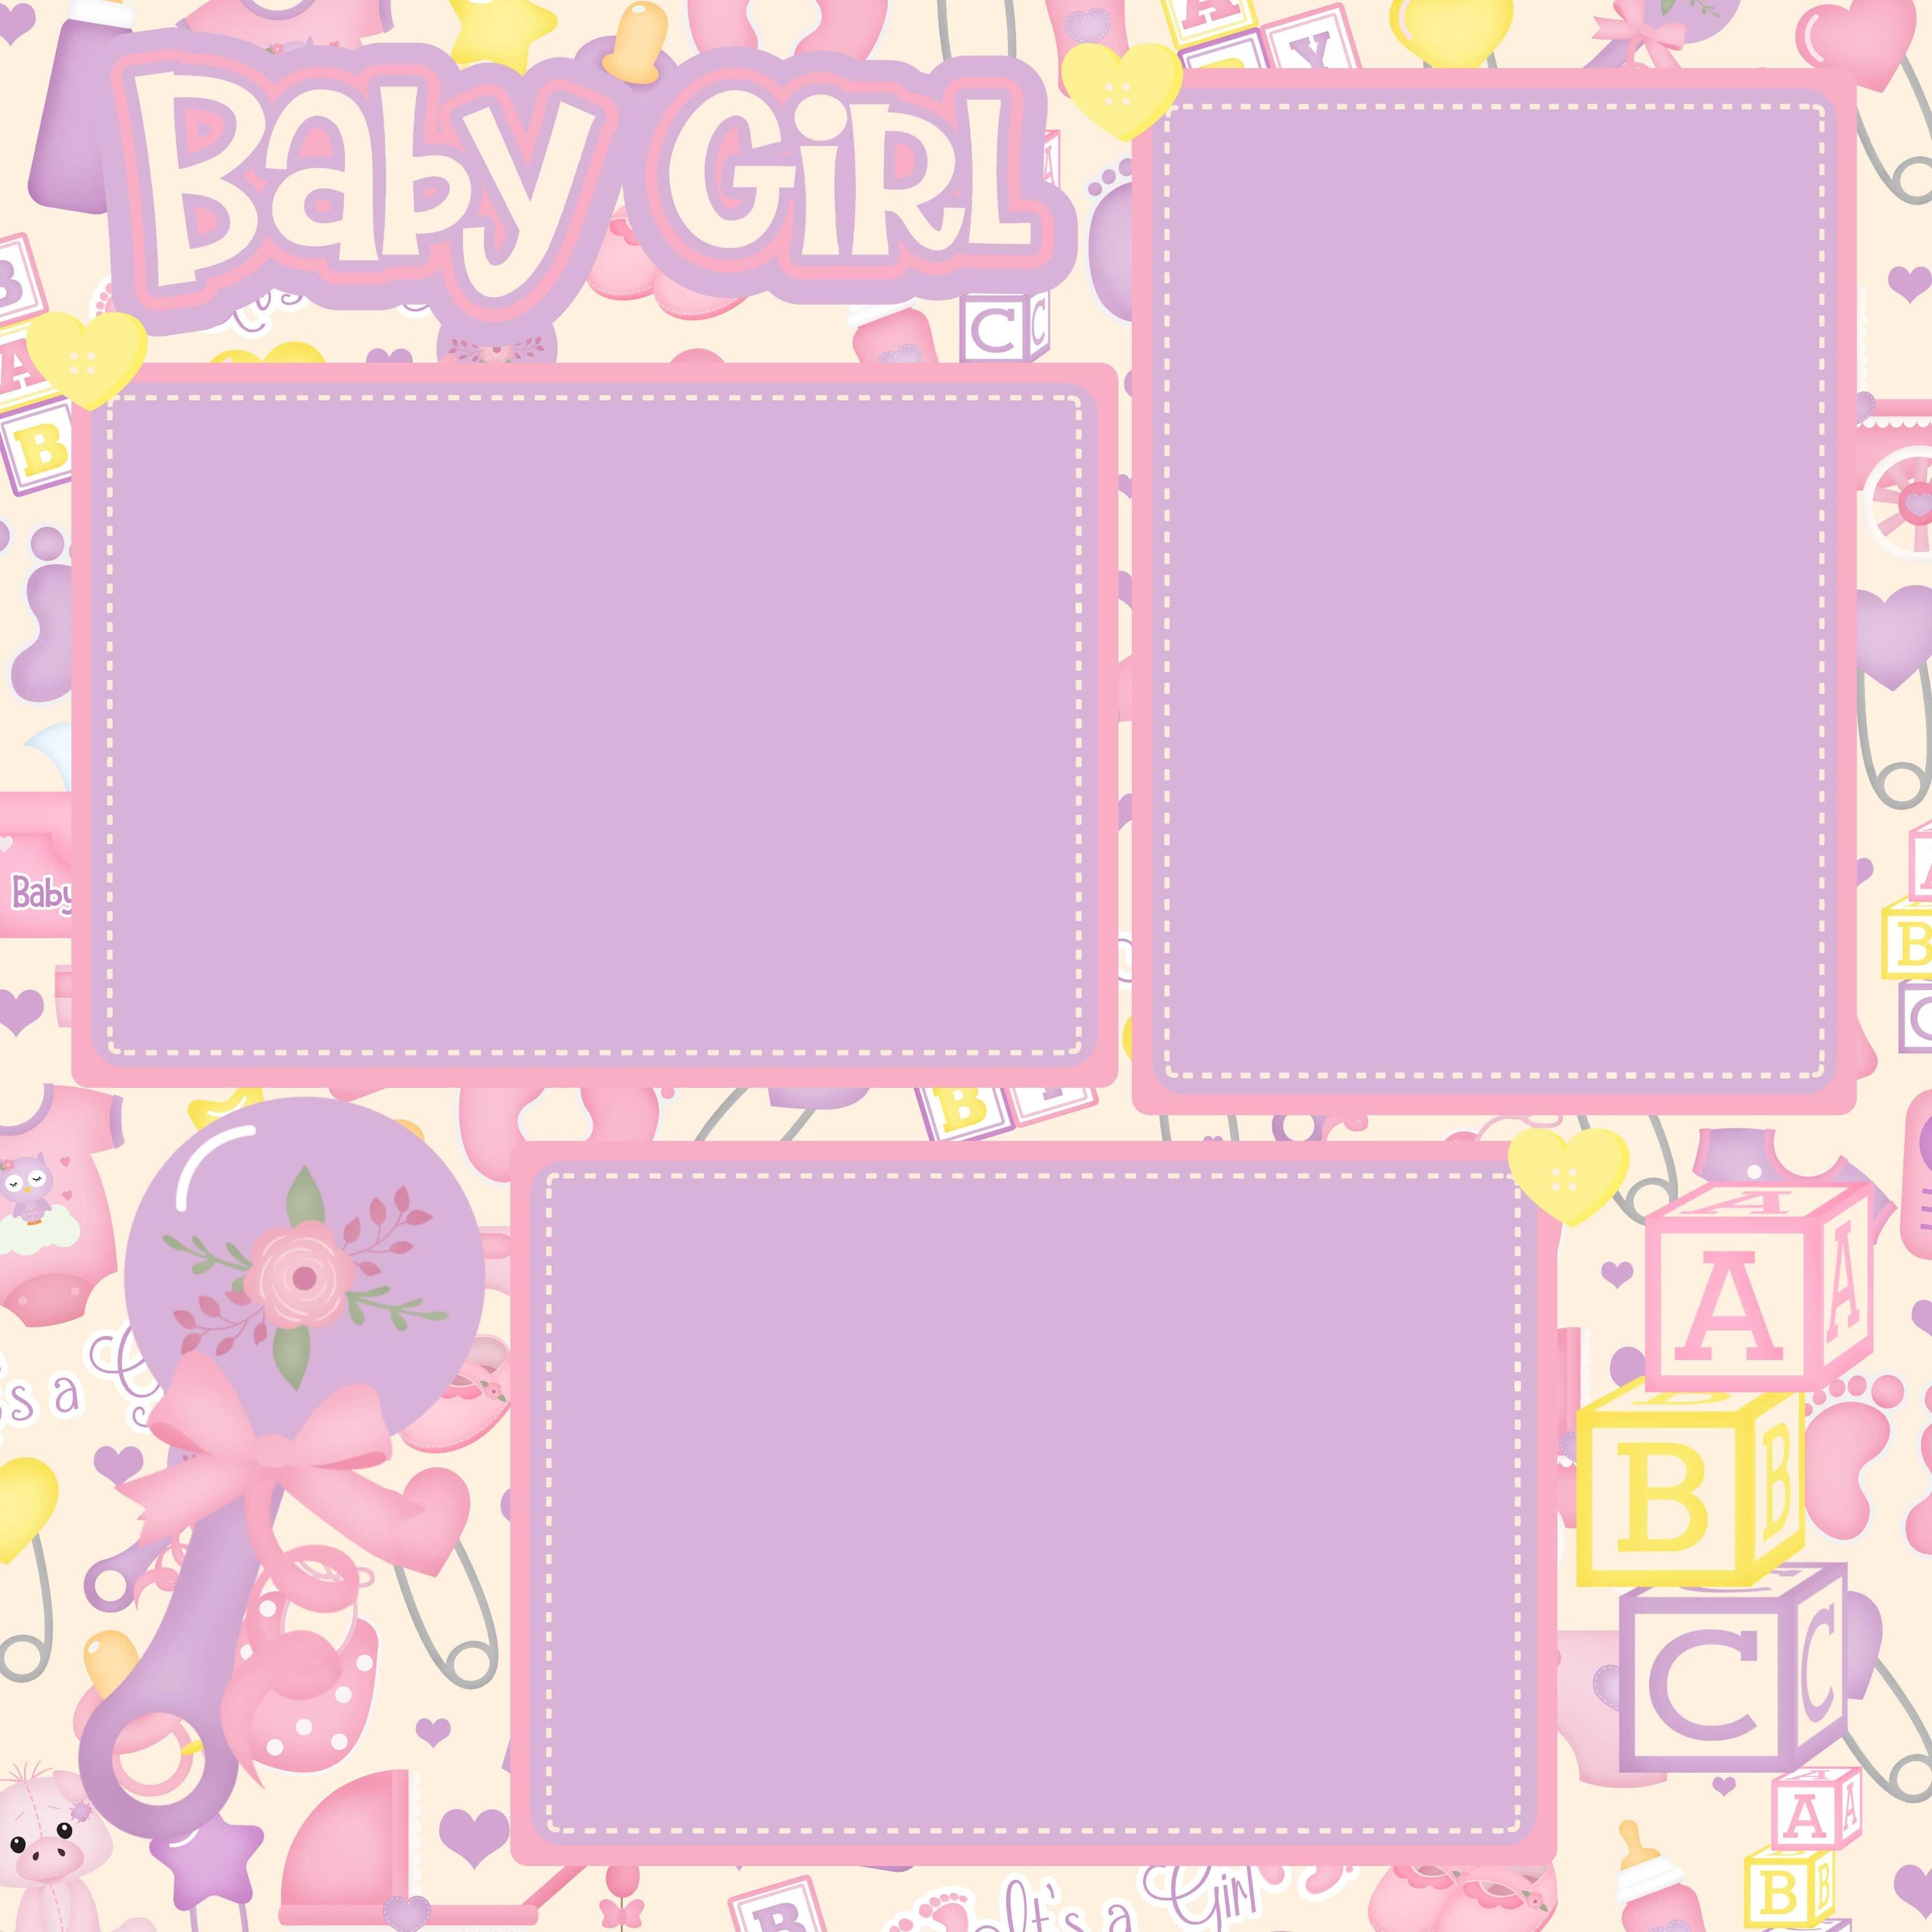 Baby Girl Digital Papers, baby shower backgrounds scrapbook